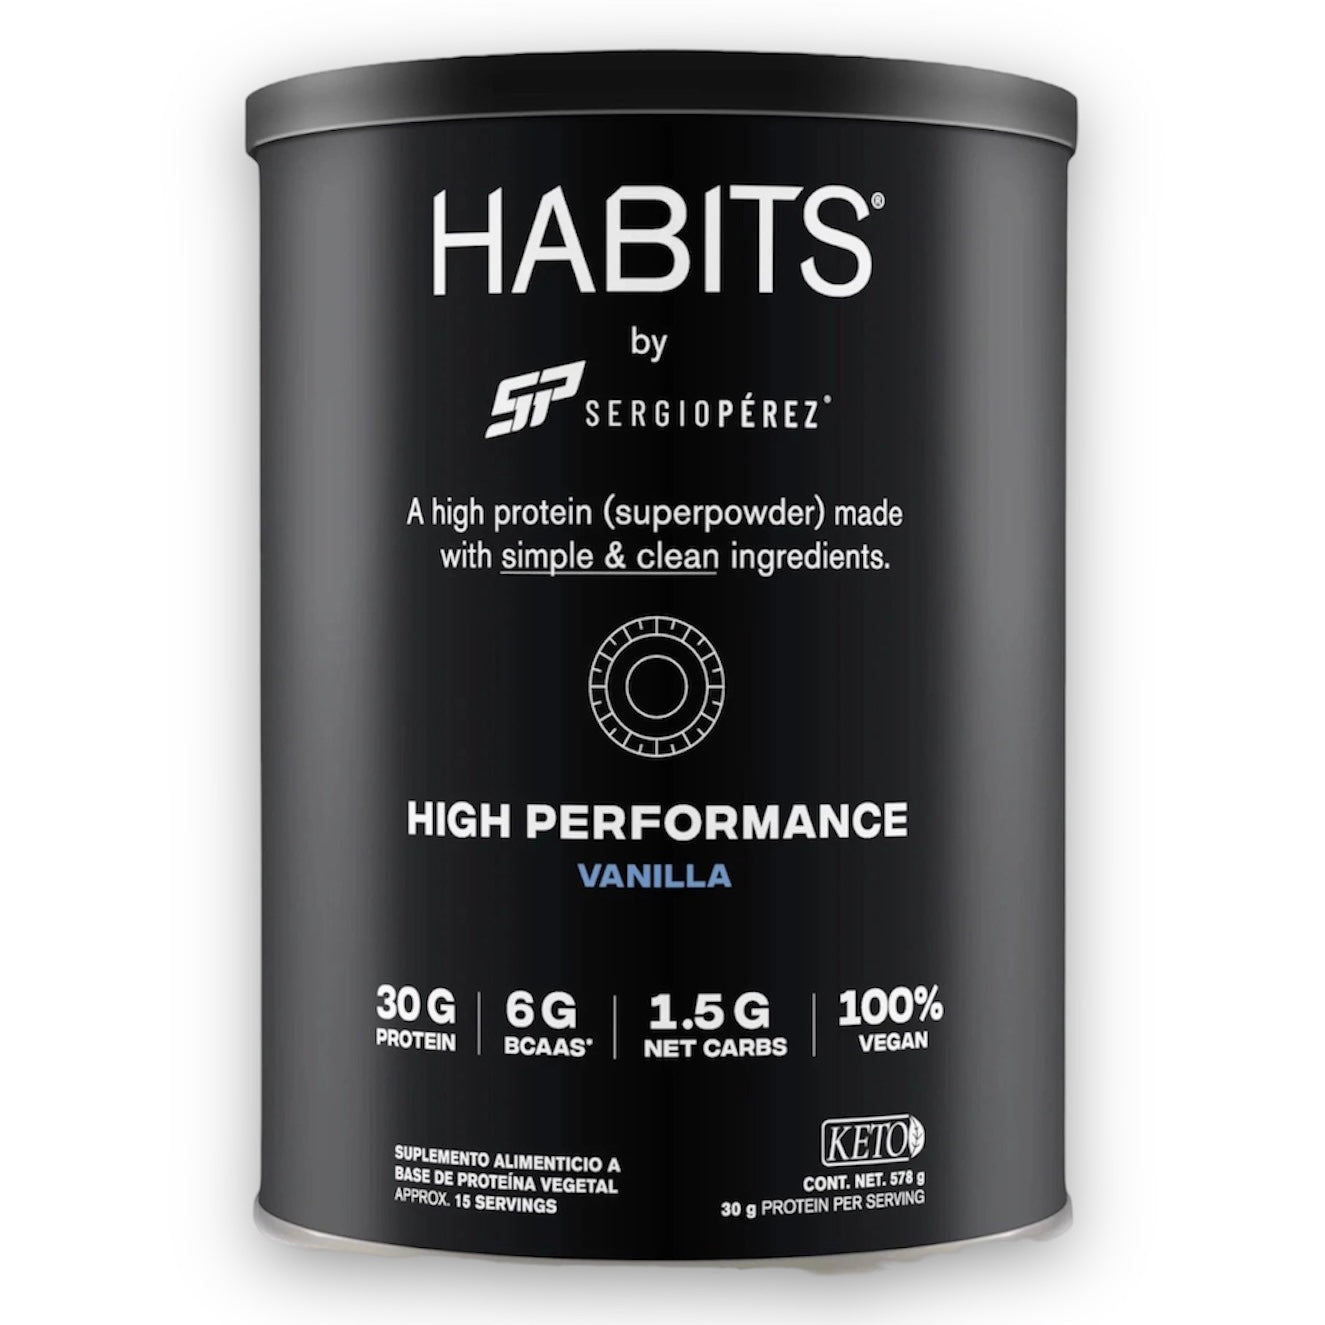 Proteína Vainilla High Performance HABITS (578g)